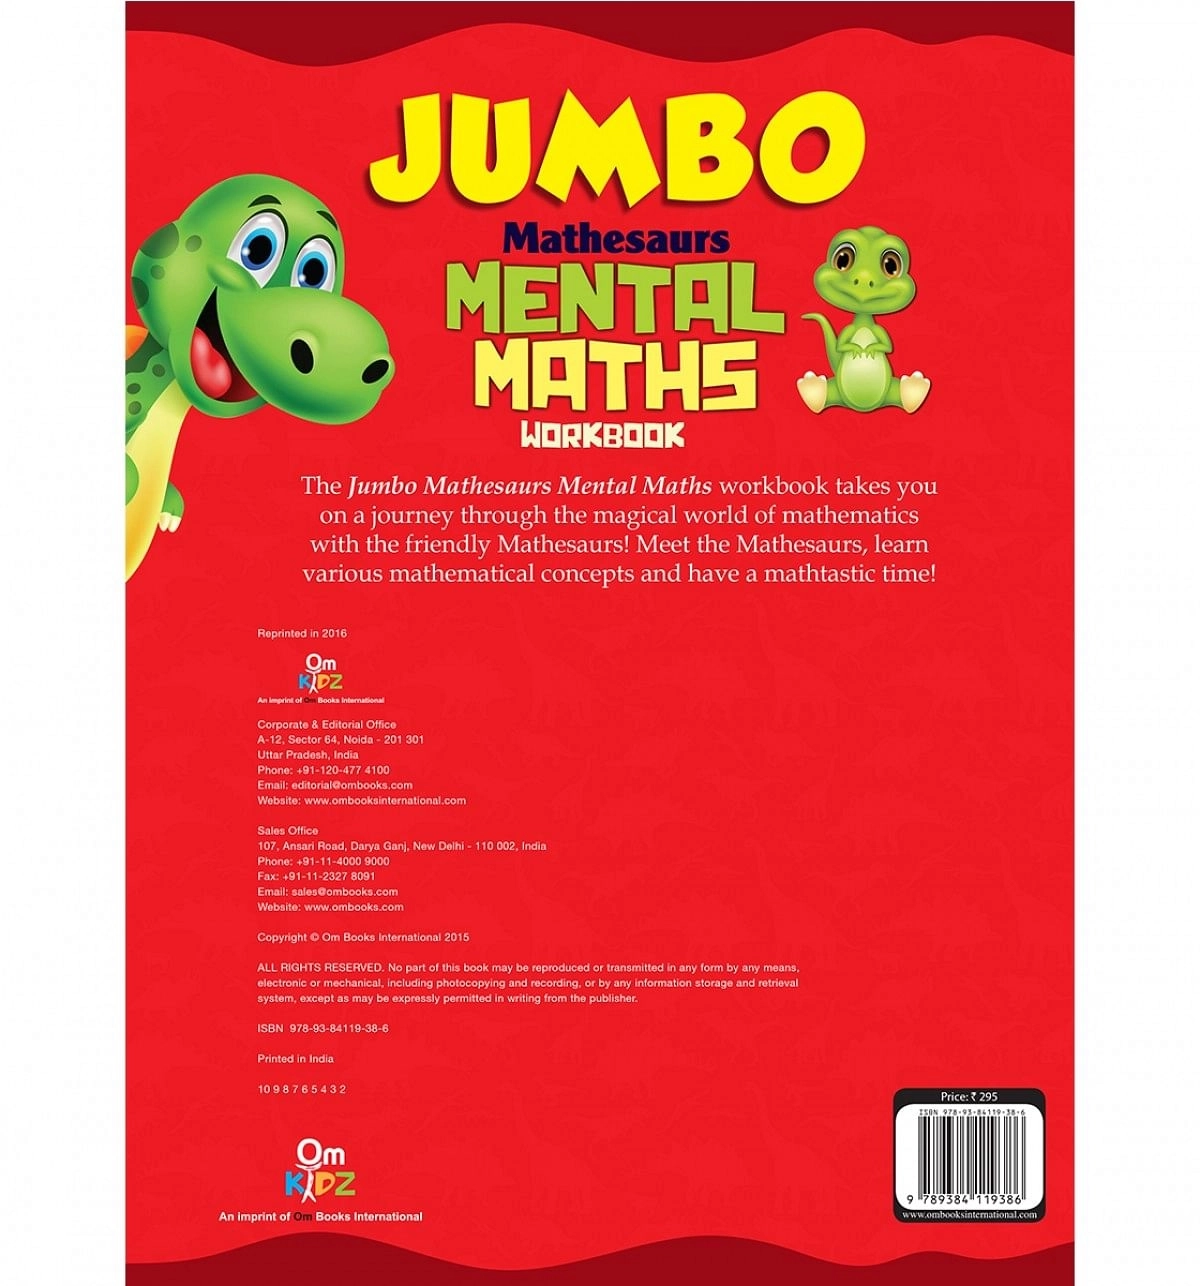 Mental Math : Jumbo Mathesaurs Mental Math Activity Workbook, 128 Pages Book, Paperback